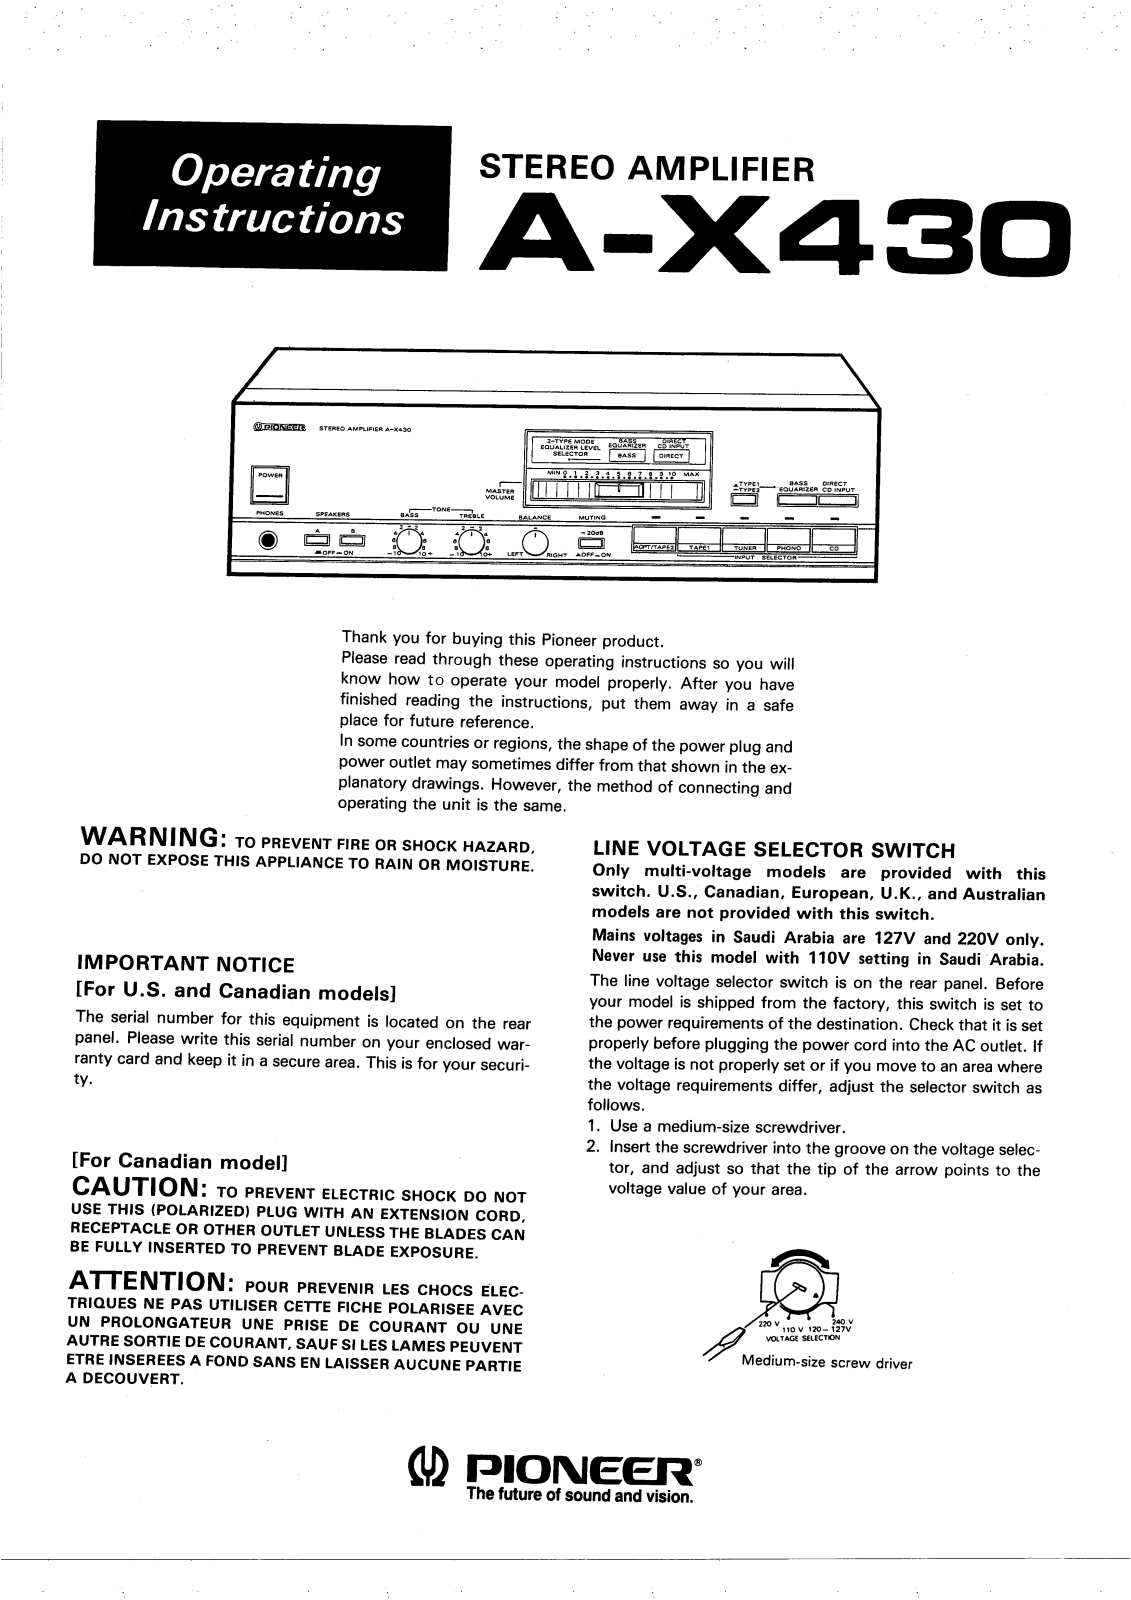 Pioneer A-X430 Manual